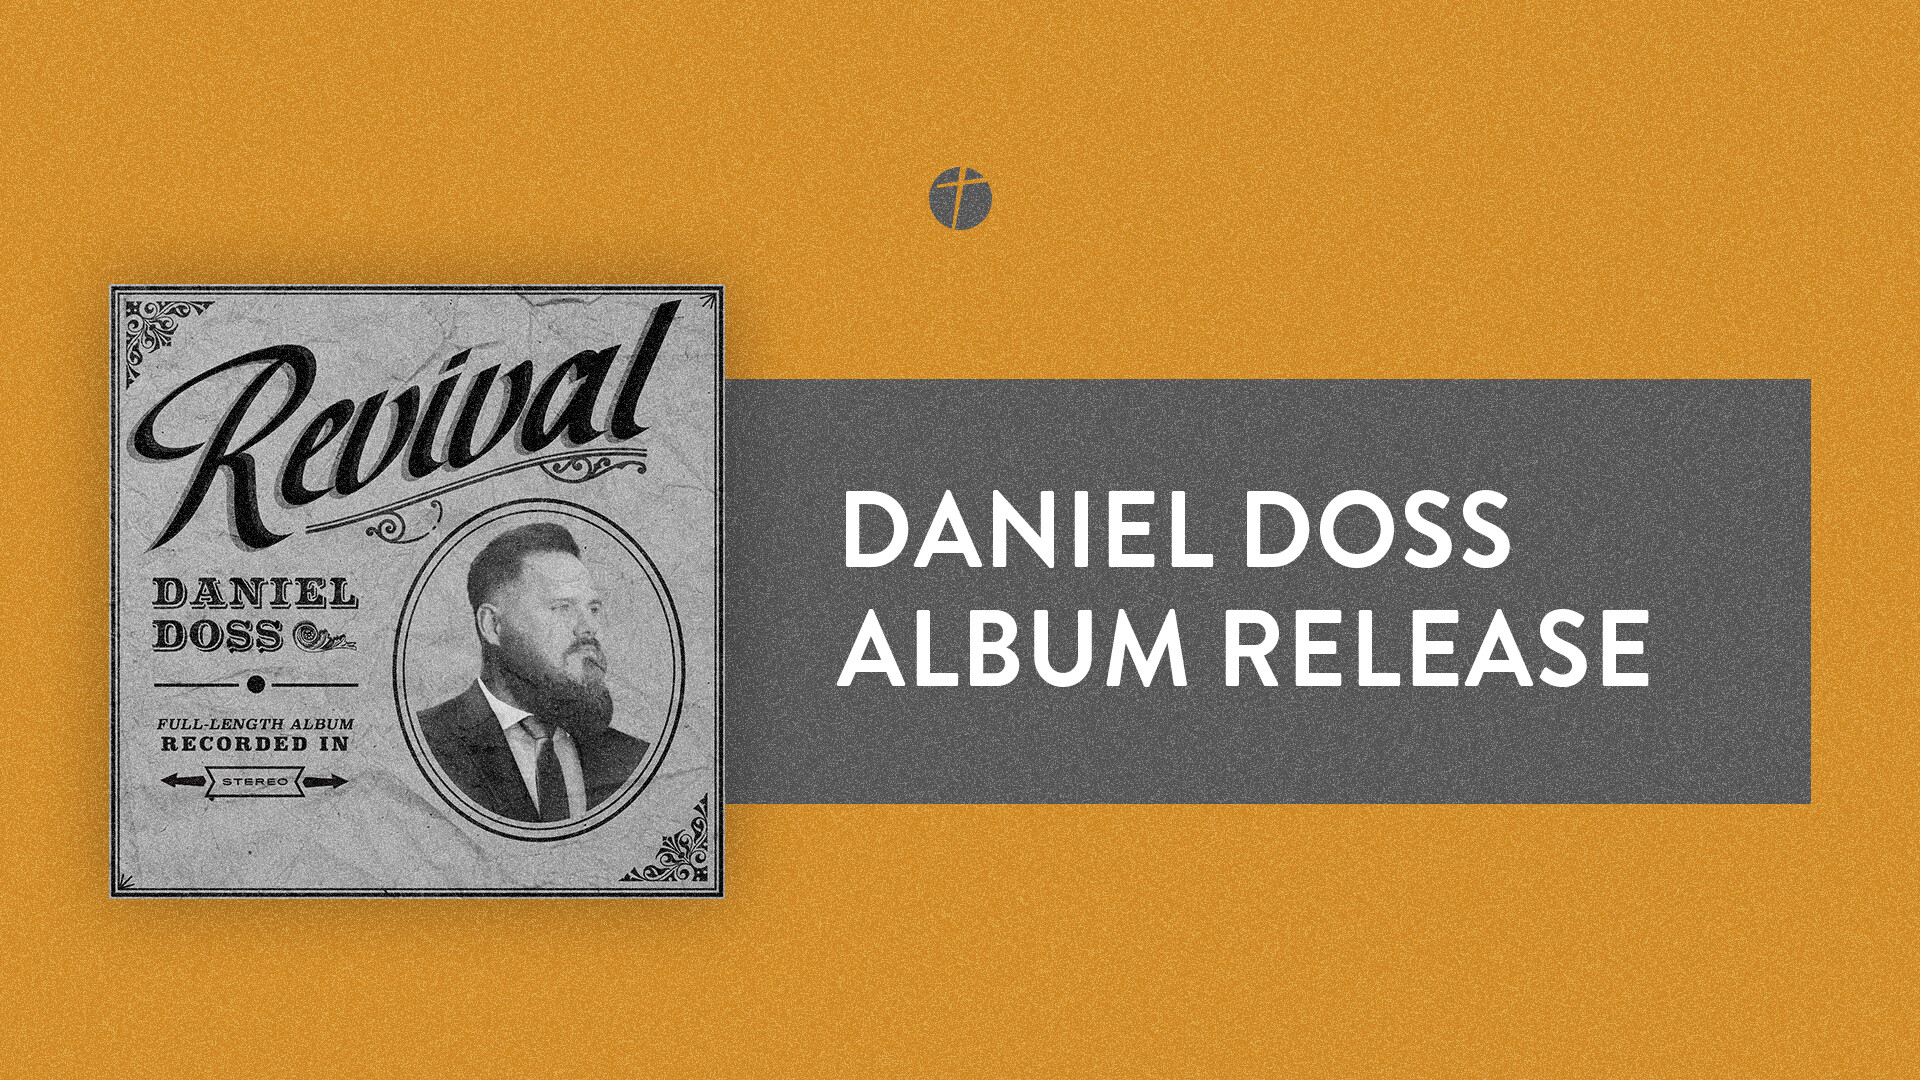 Daniel Doss Album Release